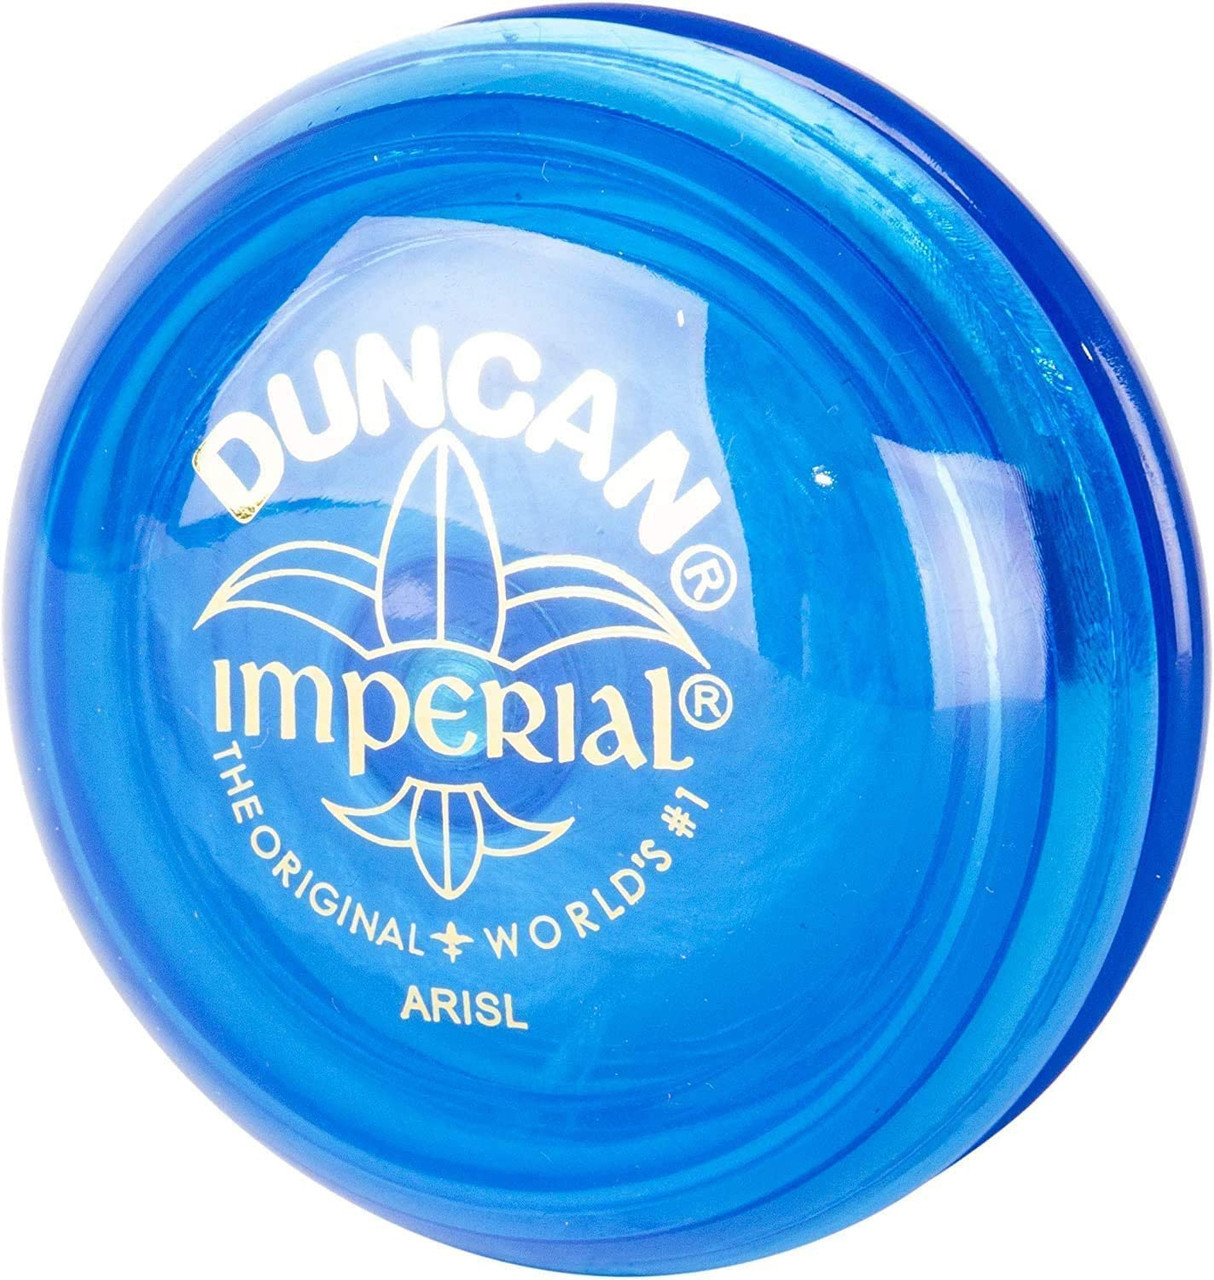 5 Classic Duncan Imperial yoyos